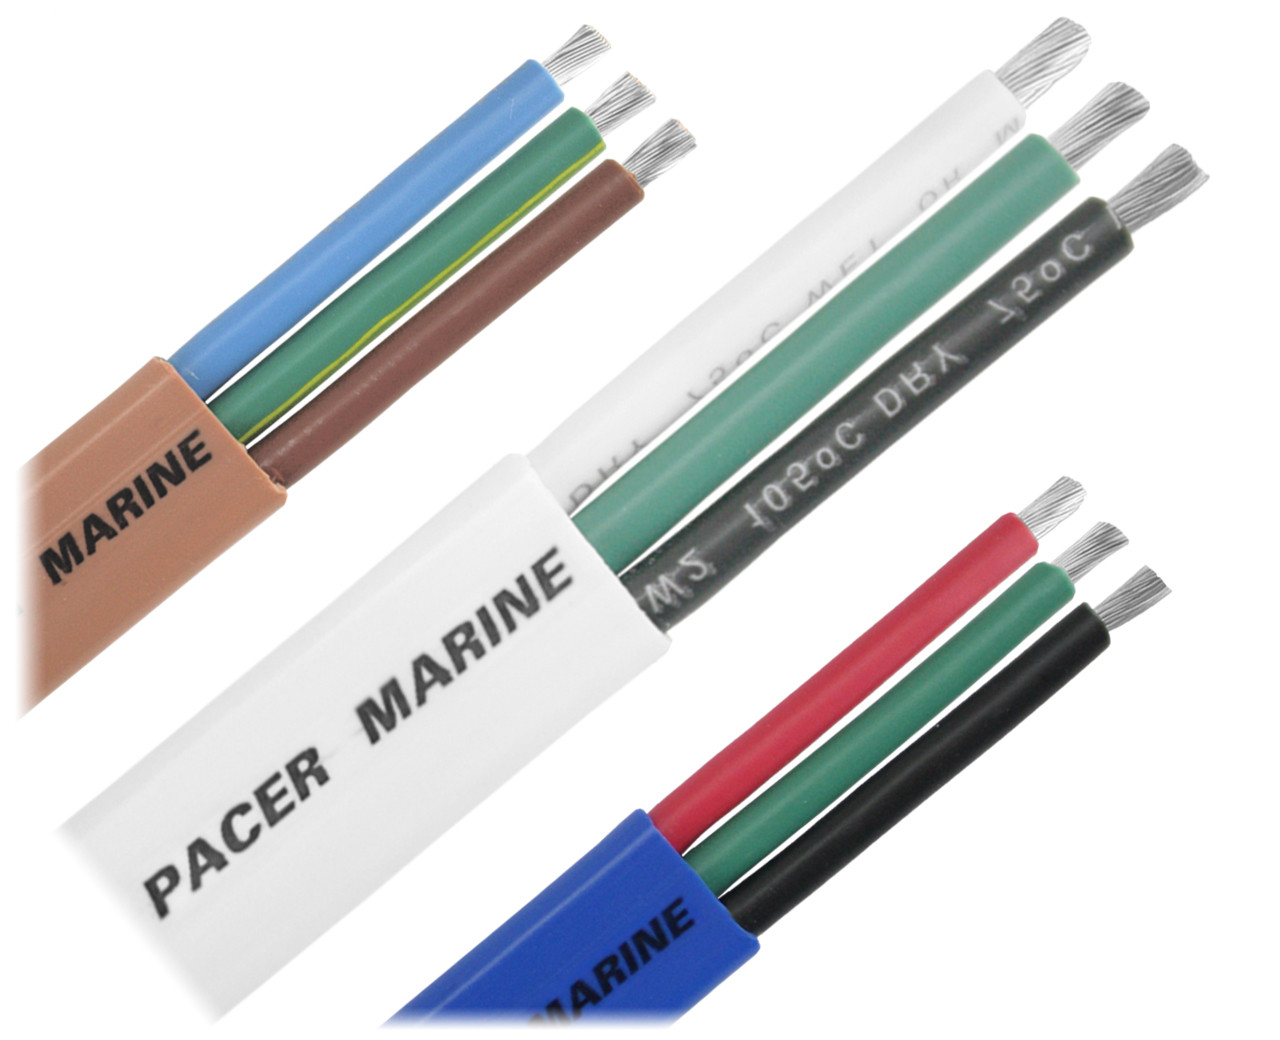 10 AWG 3 Triplex Marine UL 1426 Tinned Copper Wire